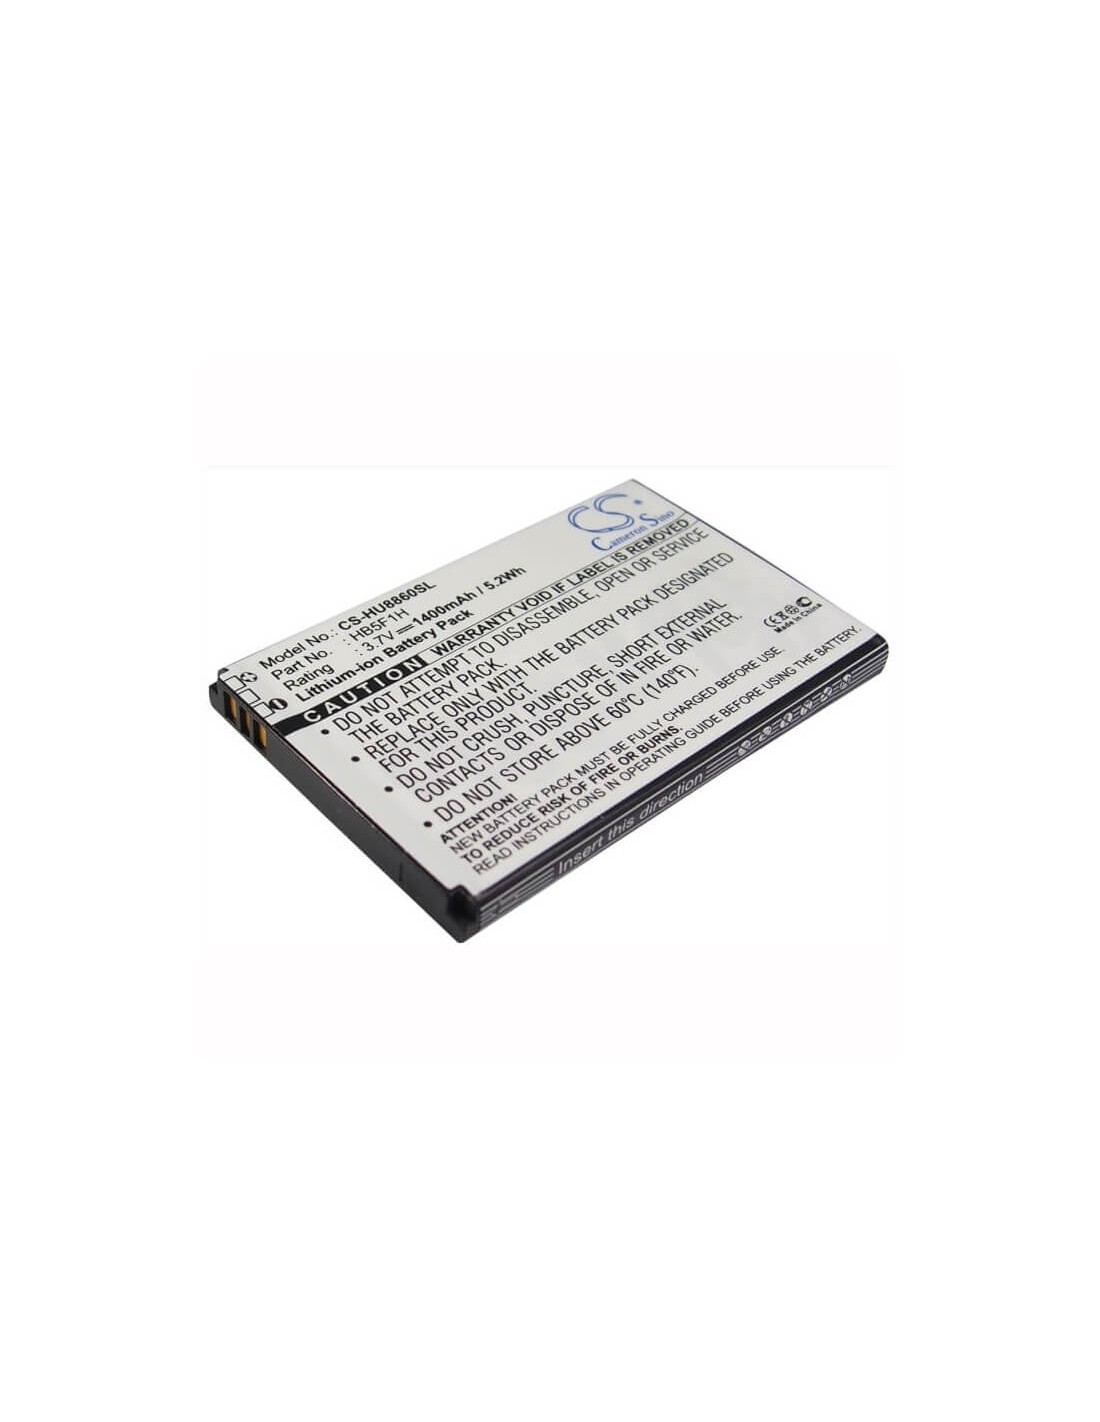 Battery for Huawei U8860, Honor, M886 3.7V, 1400mAh - 5.18Wh